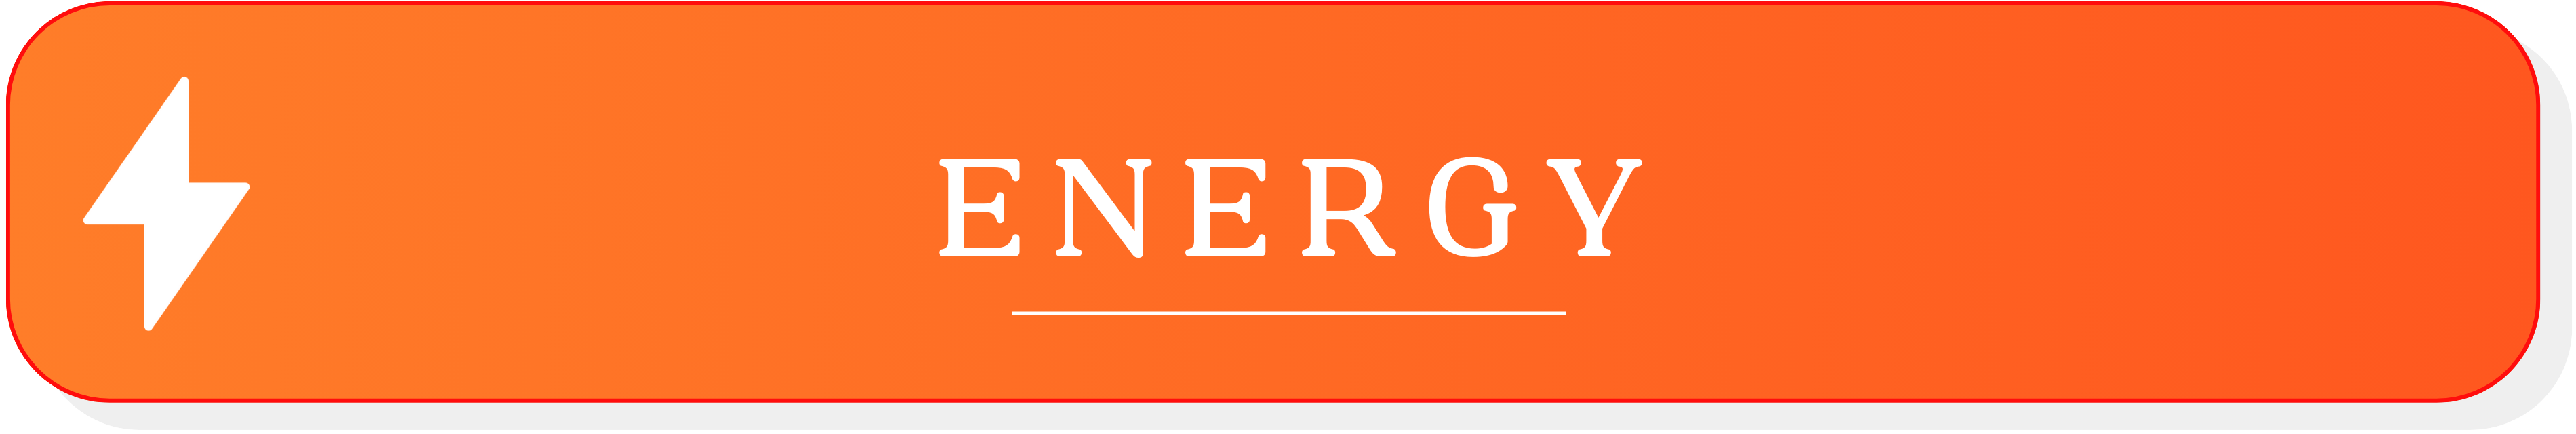 Energy Button Icon